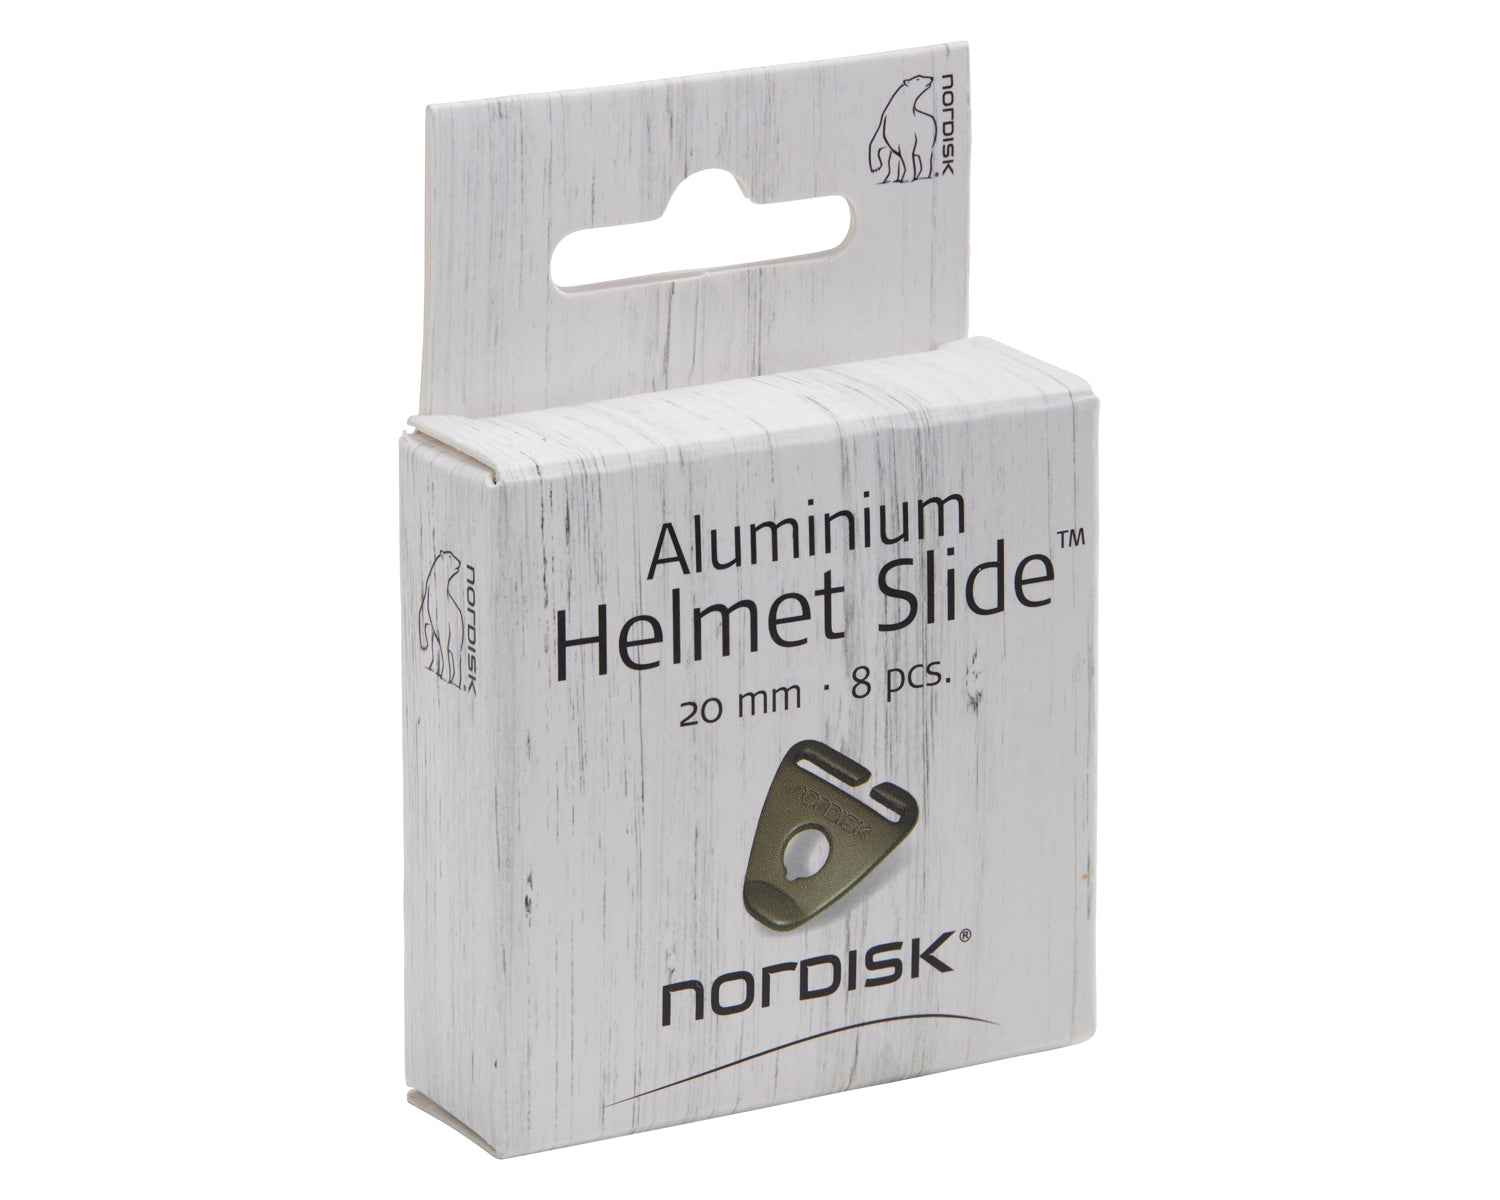 Aluminium Helmet Slide 20mm (8pcs)